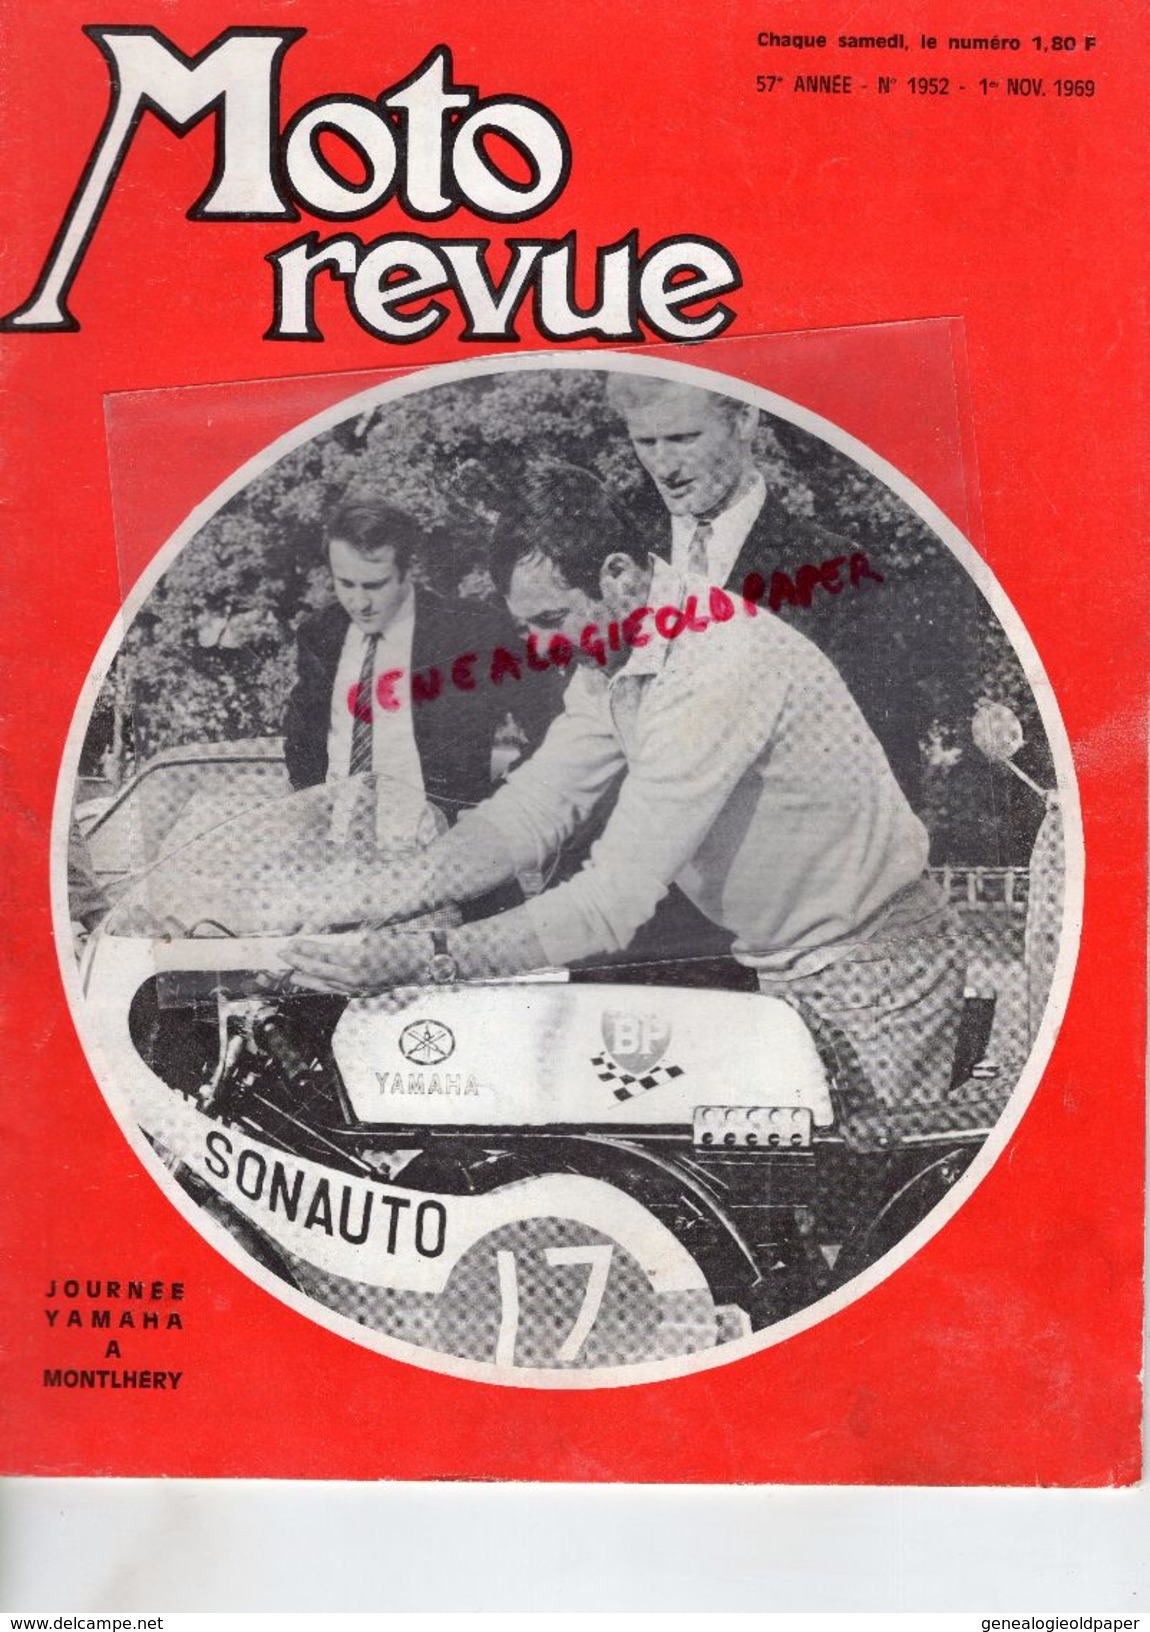 MOTO REVUE - 1-11-1969- N° 1952- YAMAHA A MONTLHERY-247 TRIAL MONTESA- PUY DE DOME- KAWASAKI A1R-VIRY CHATILLON-TRIUMPH - Motorrad